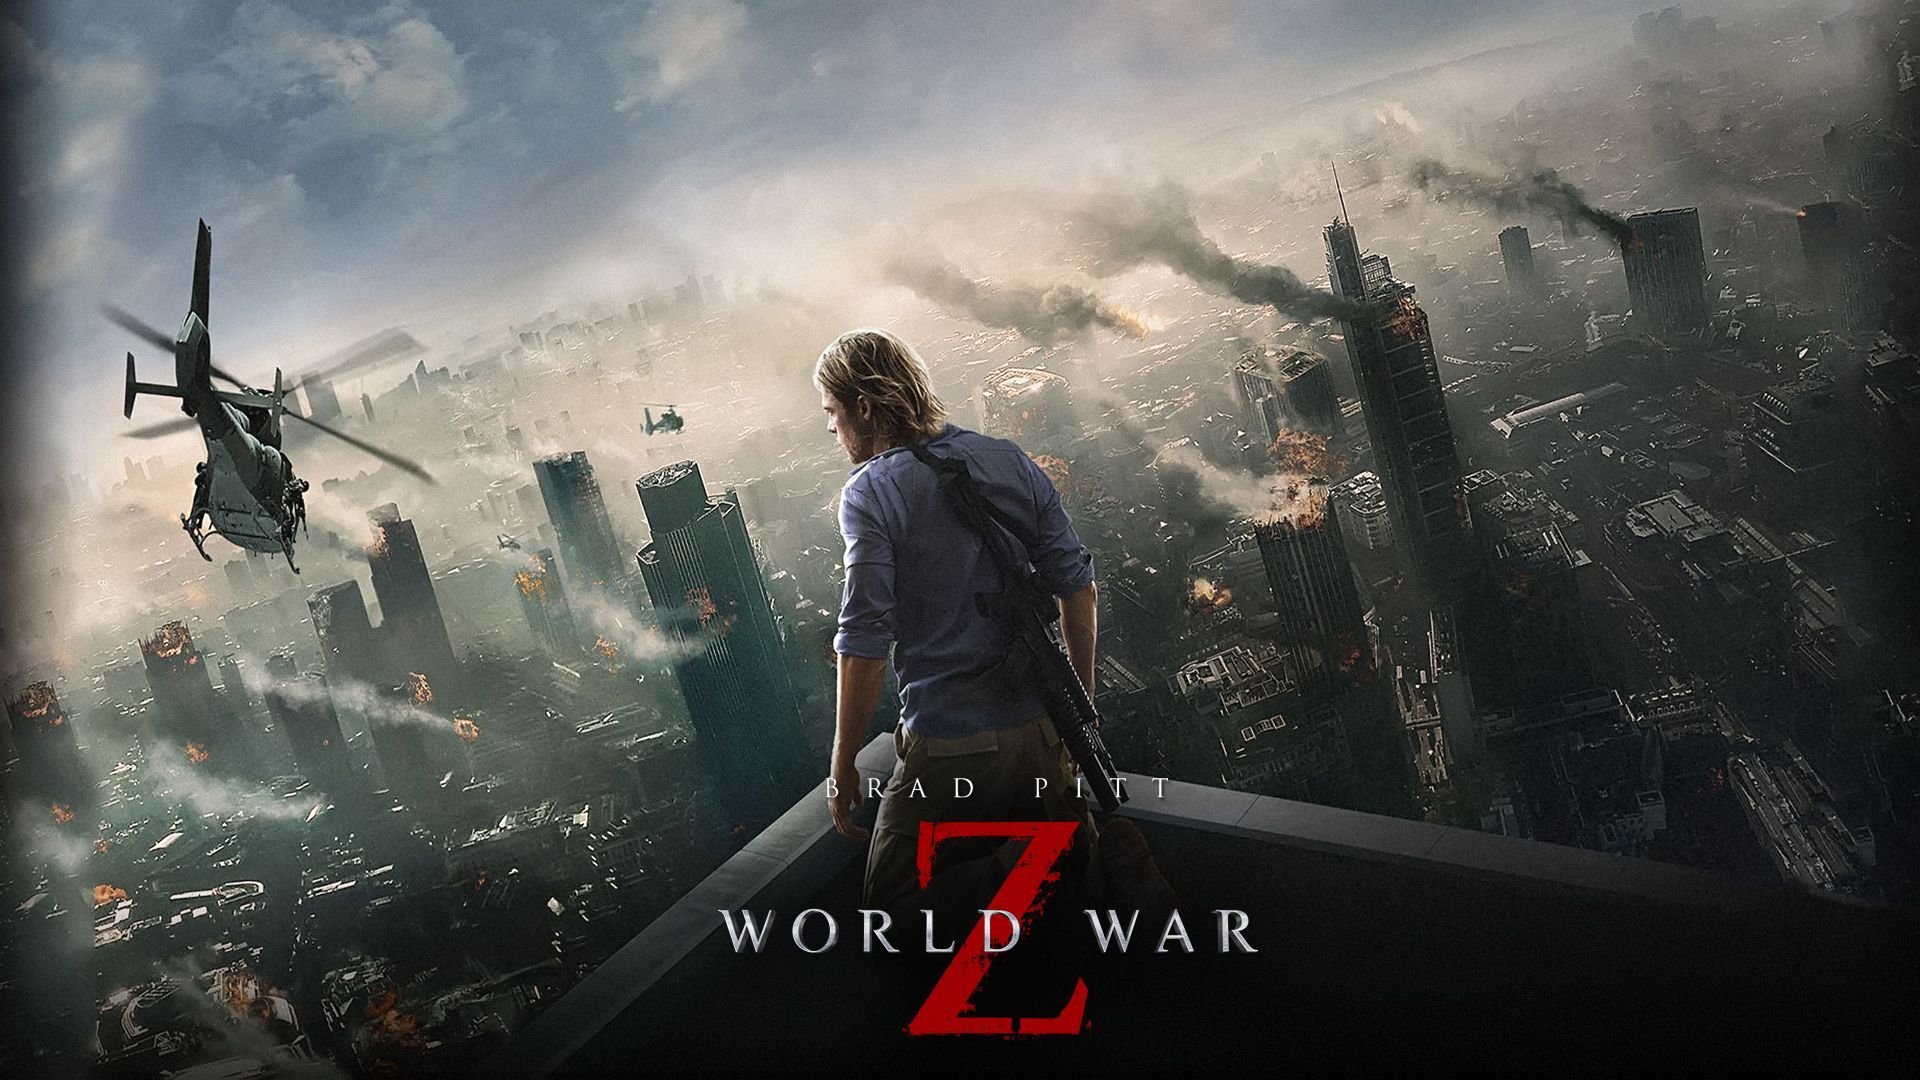 David Fincher Officially Directing World War Z 2